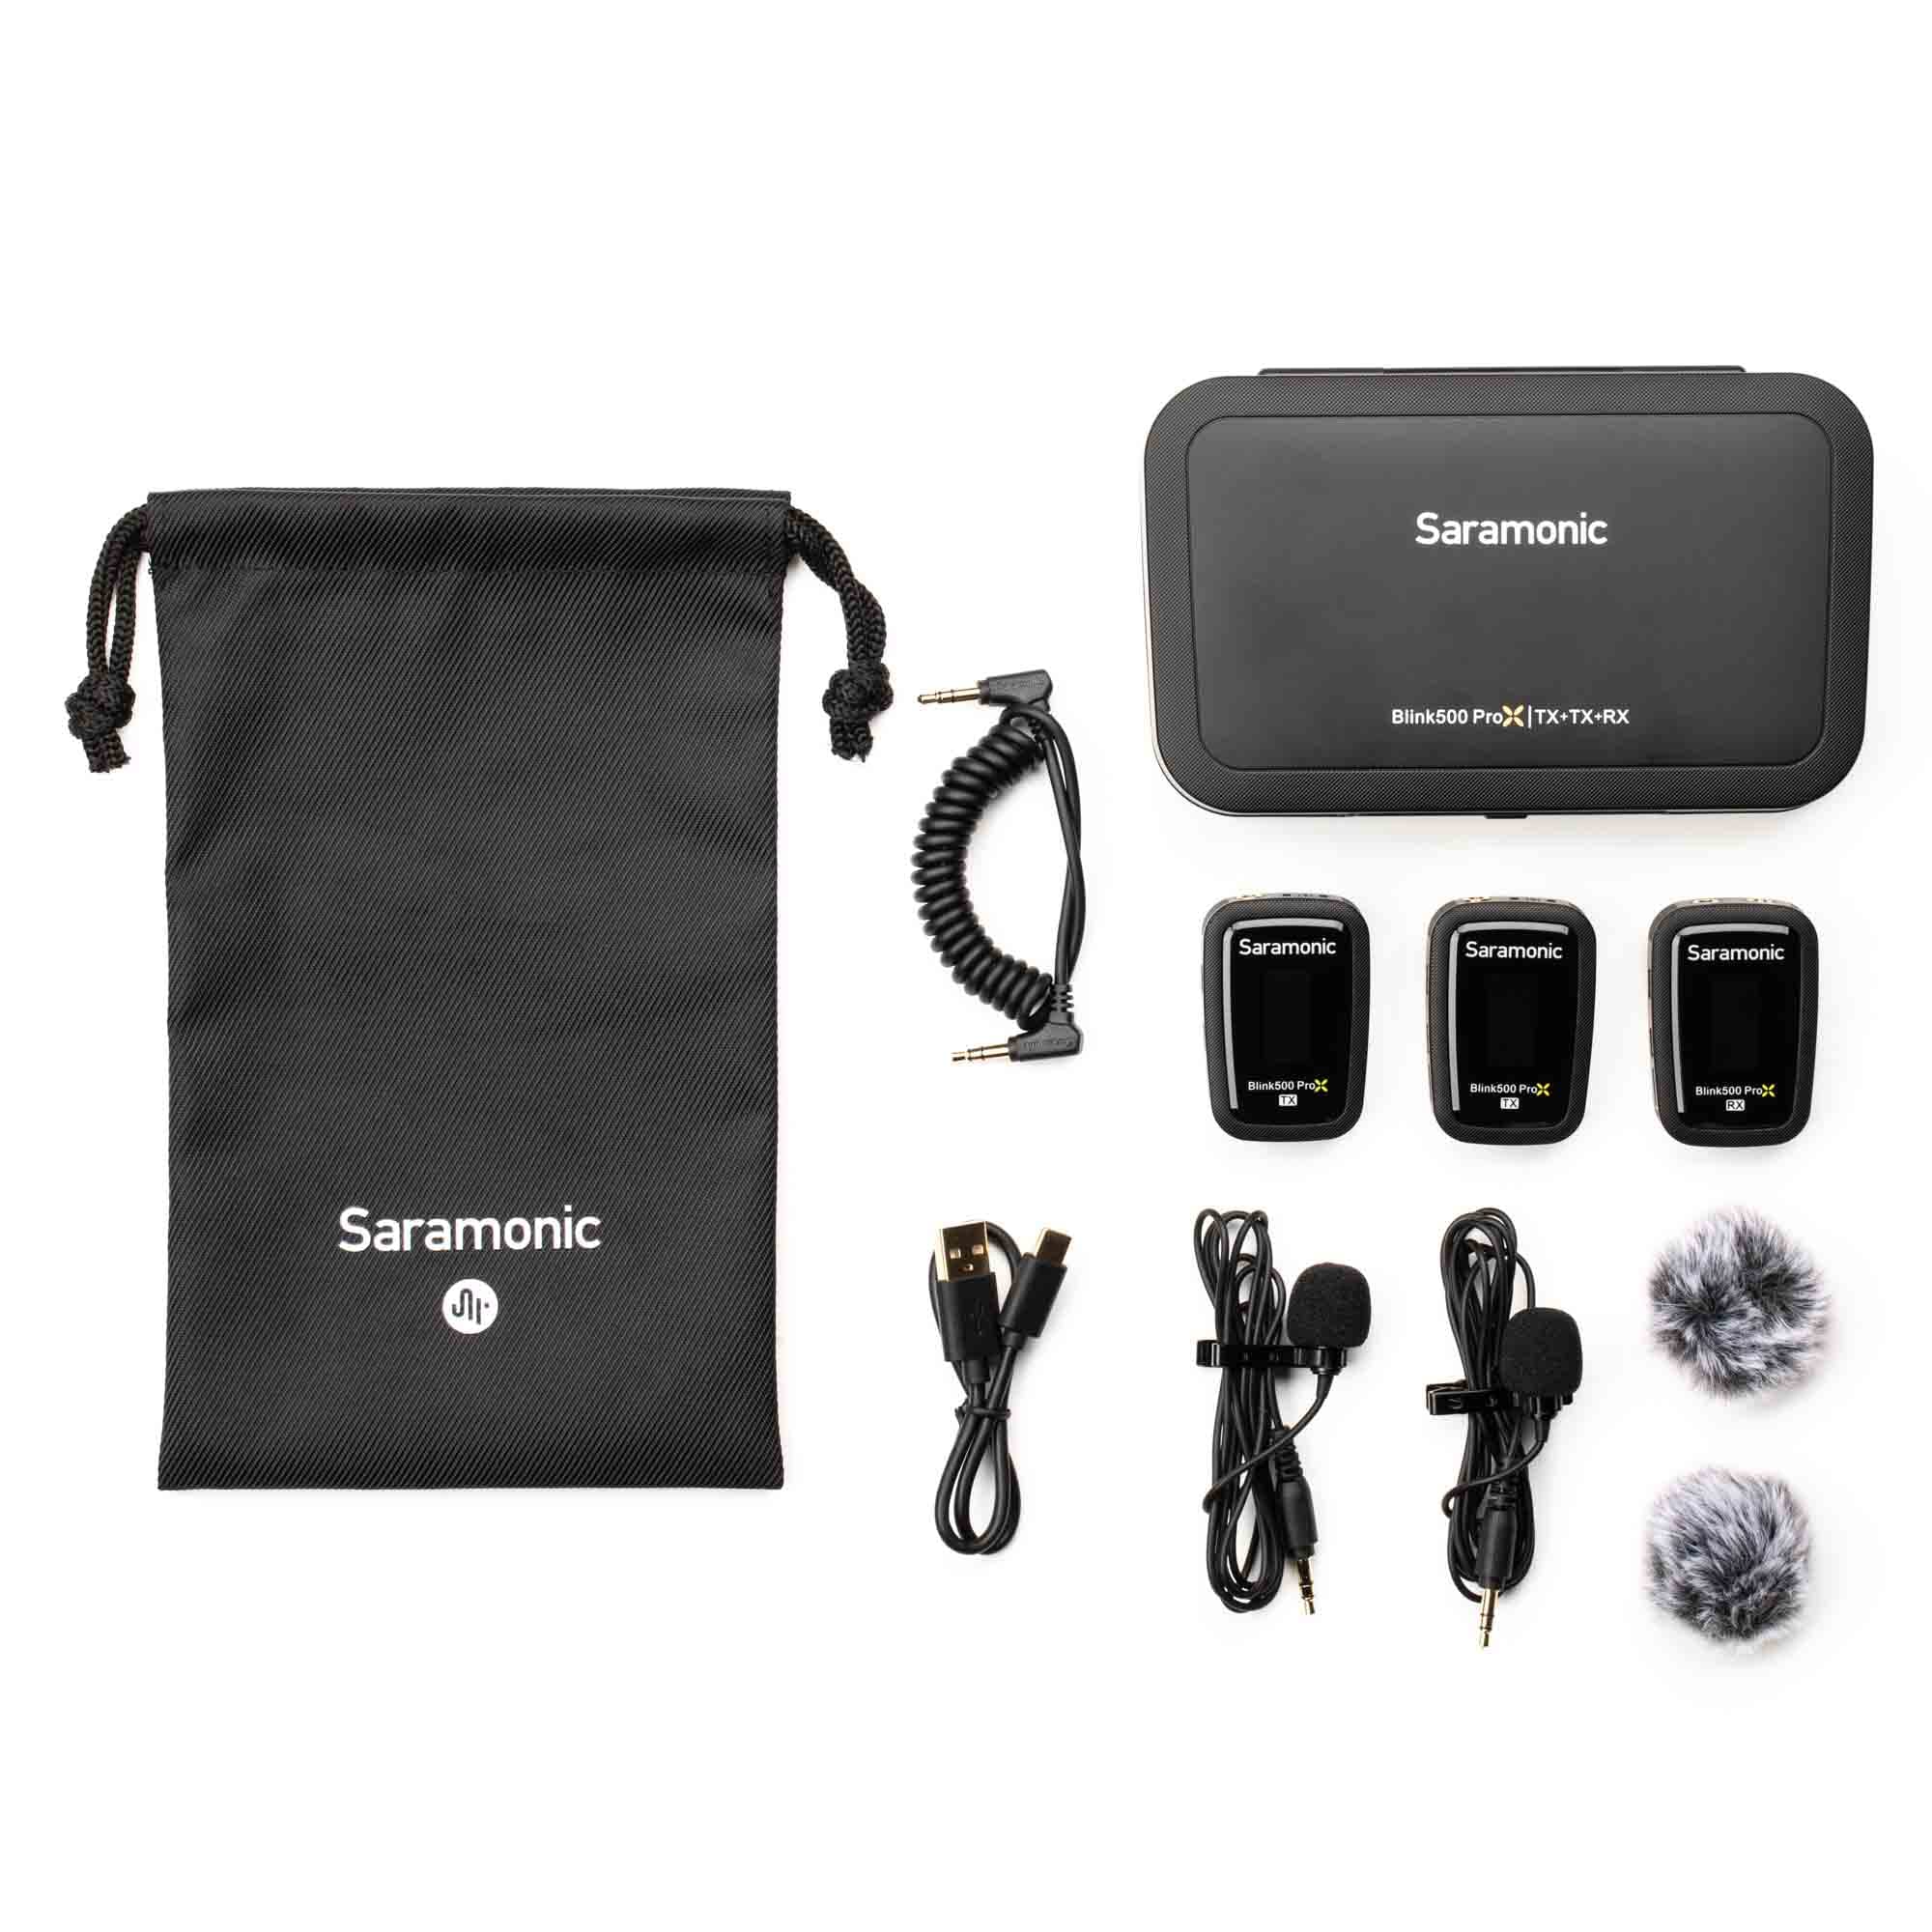 Saramonic Blink 500 Prox B2 | 2 Personen Wireless 2,4 GHz Clip-On Mikrofonsystem mit Lavaliers (BLINK500PROXB2)